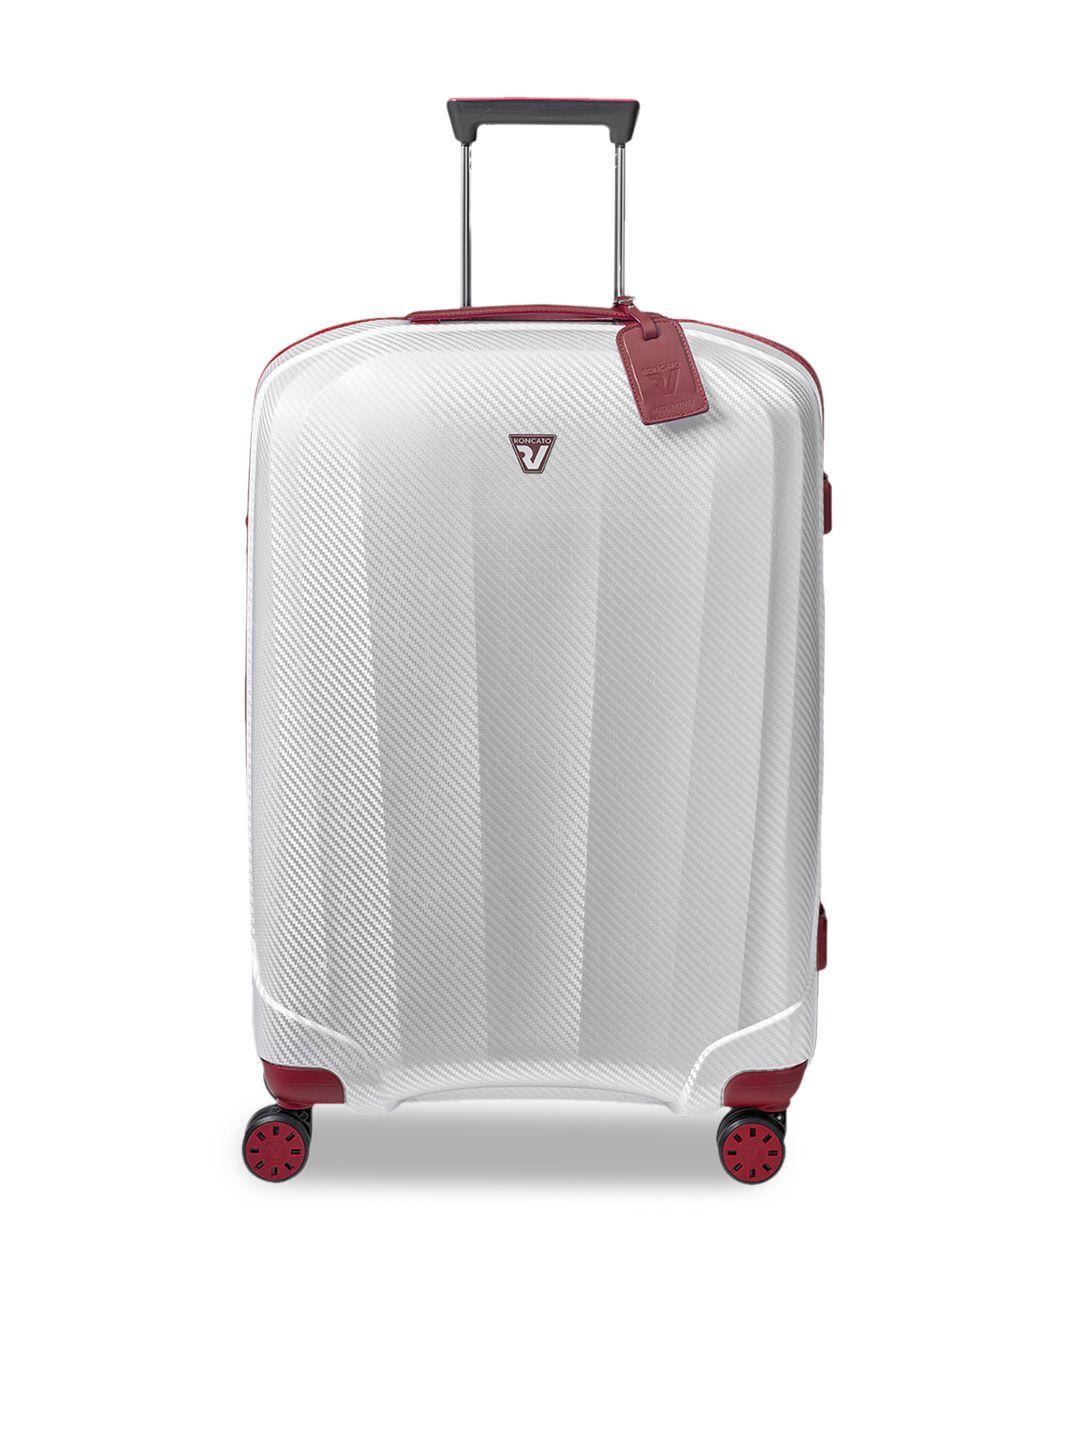 roncato we are glam range rosso & bianco color hard large luggage